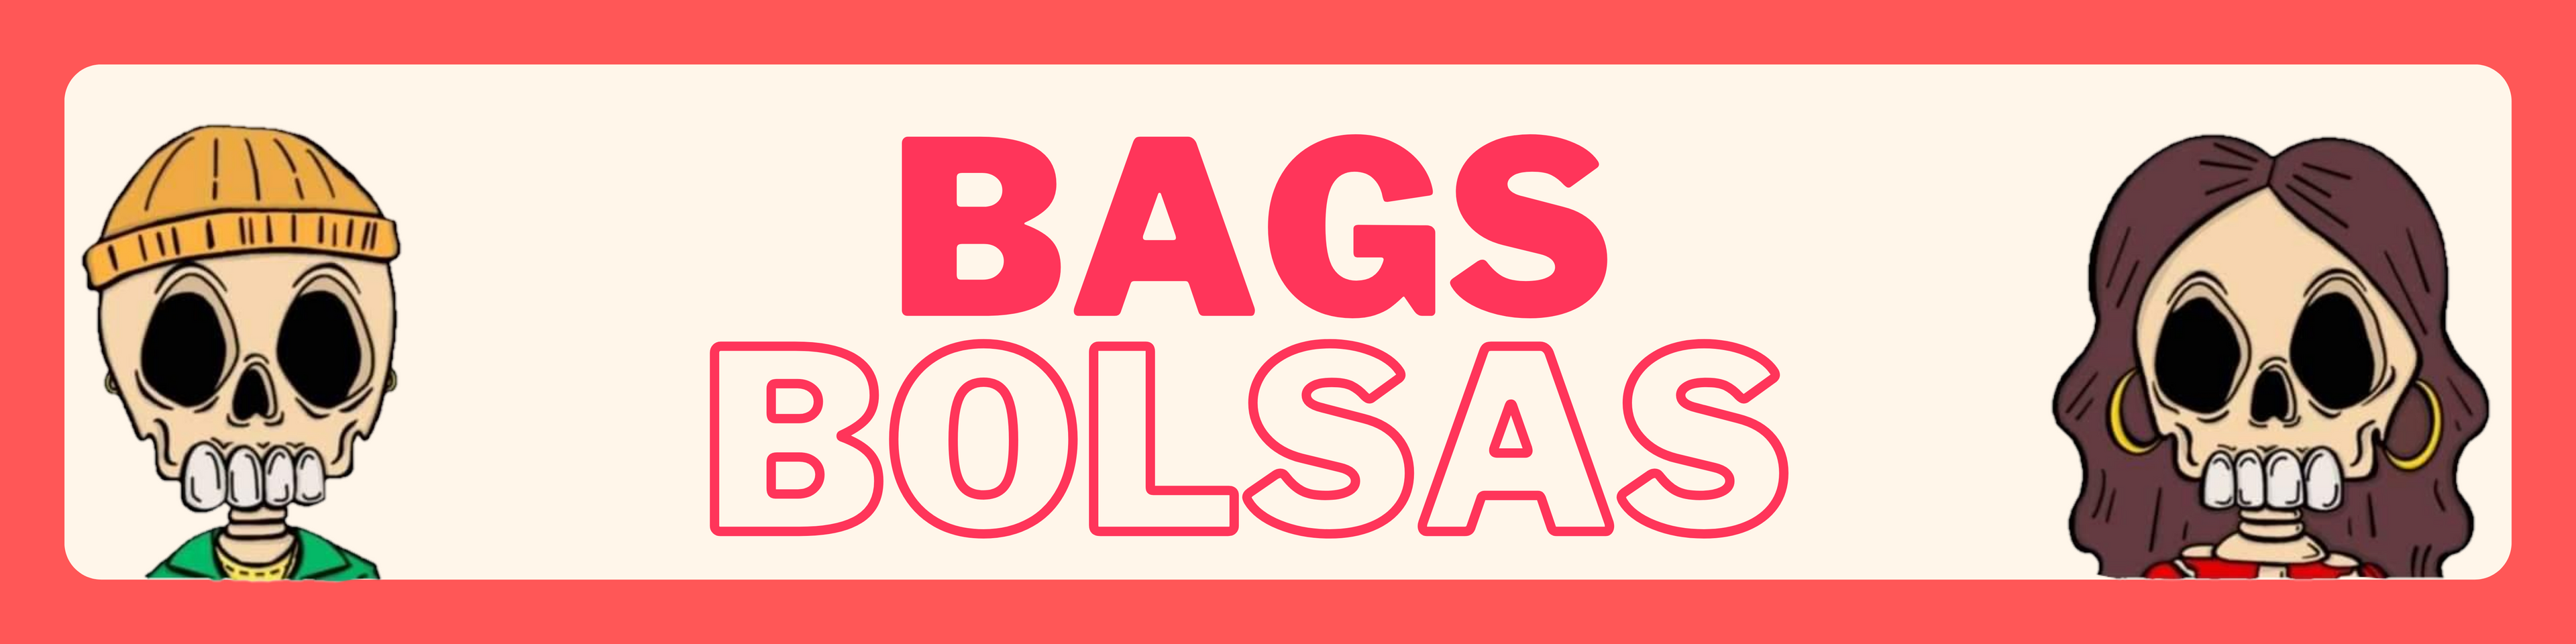 bags / bolsas